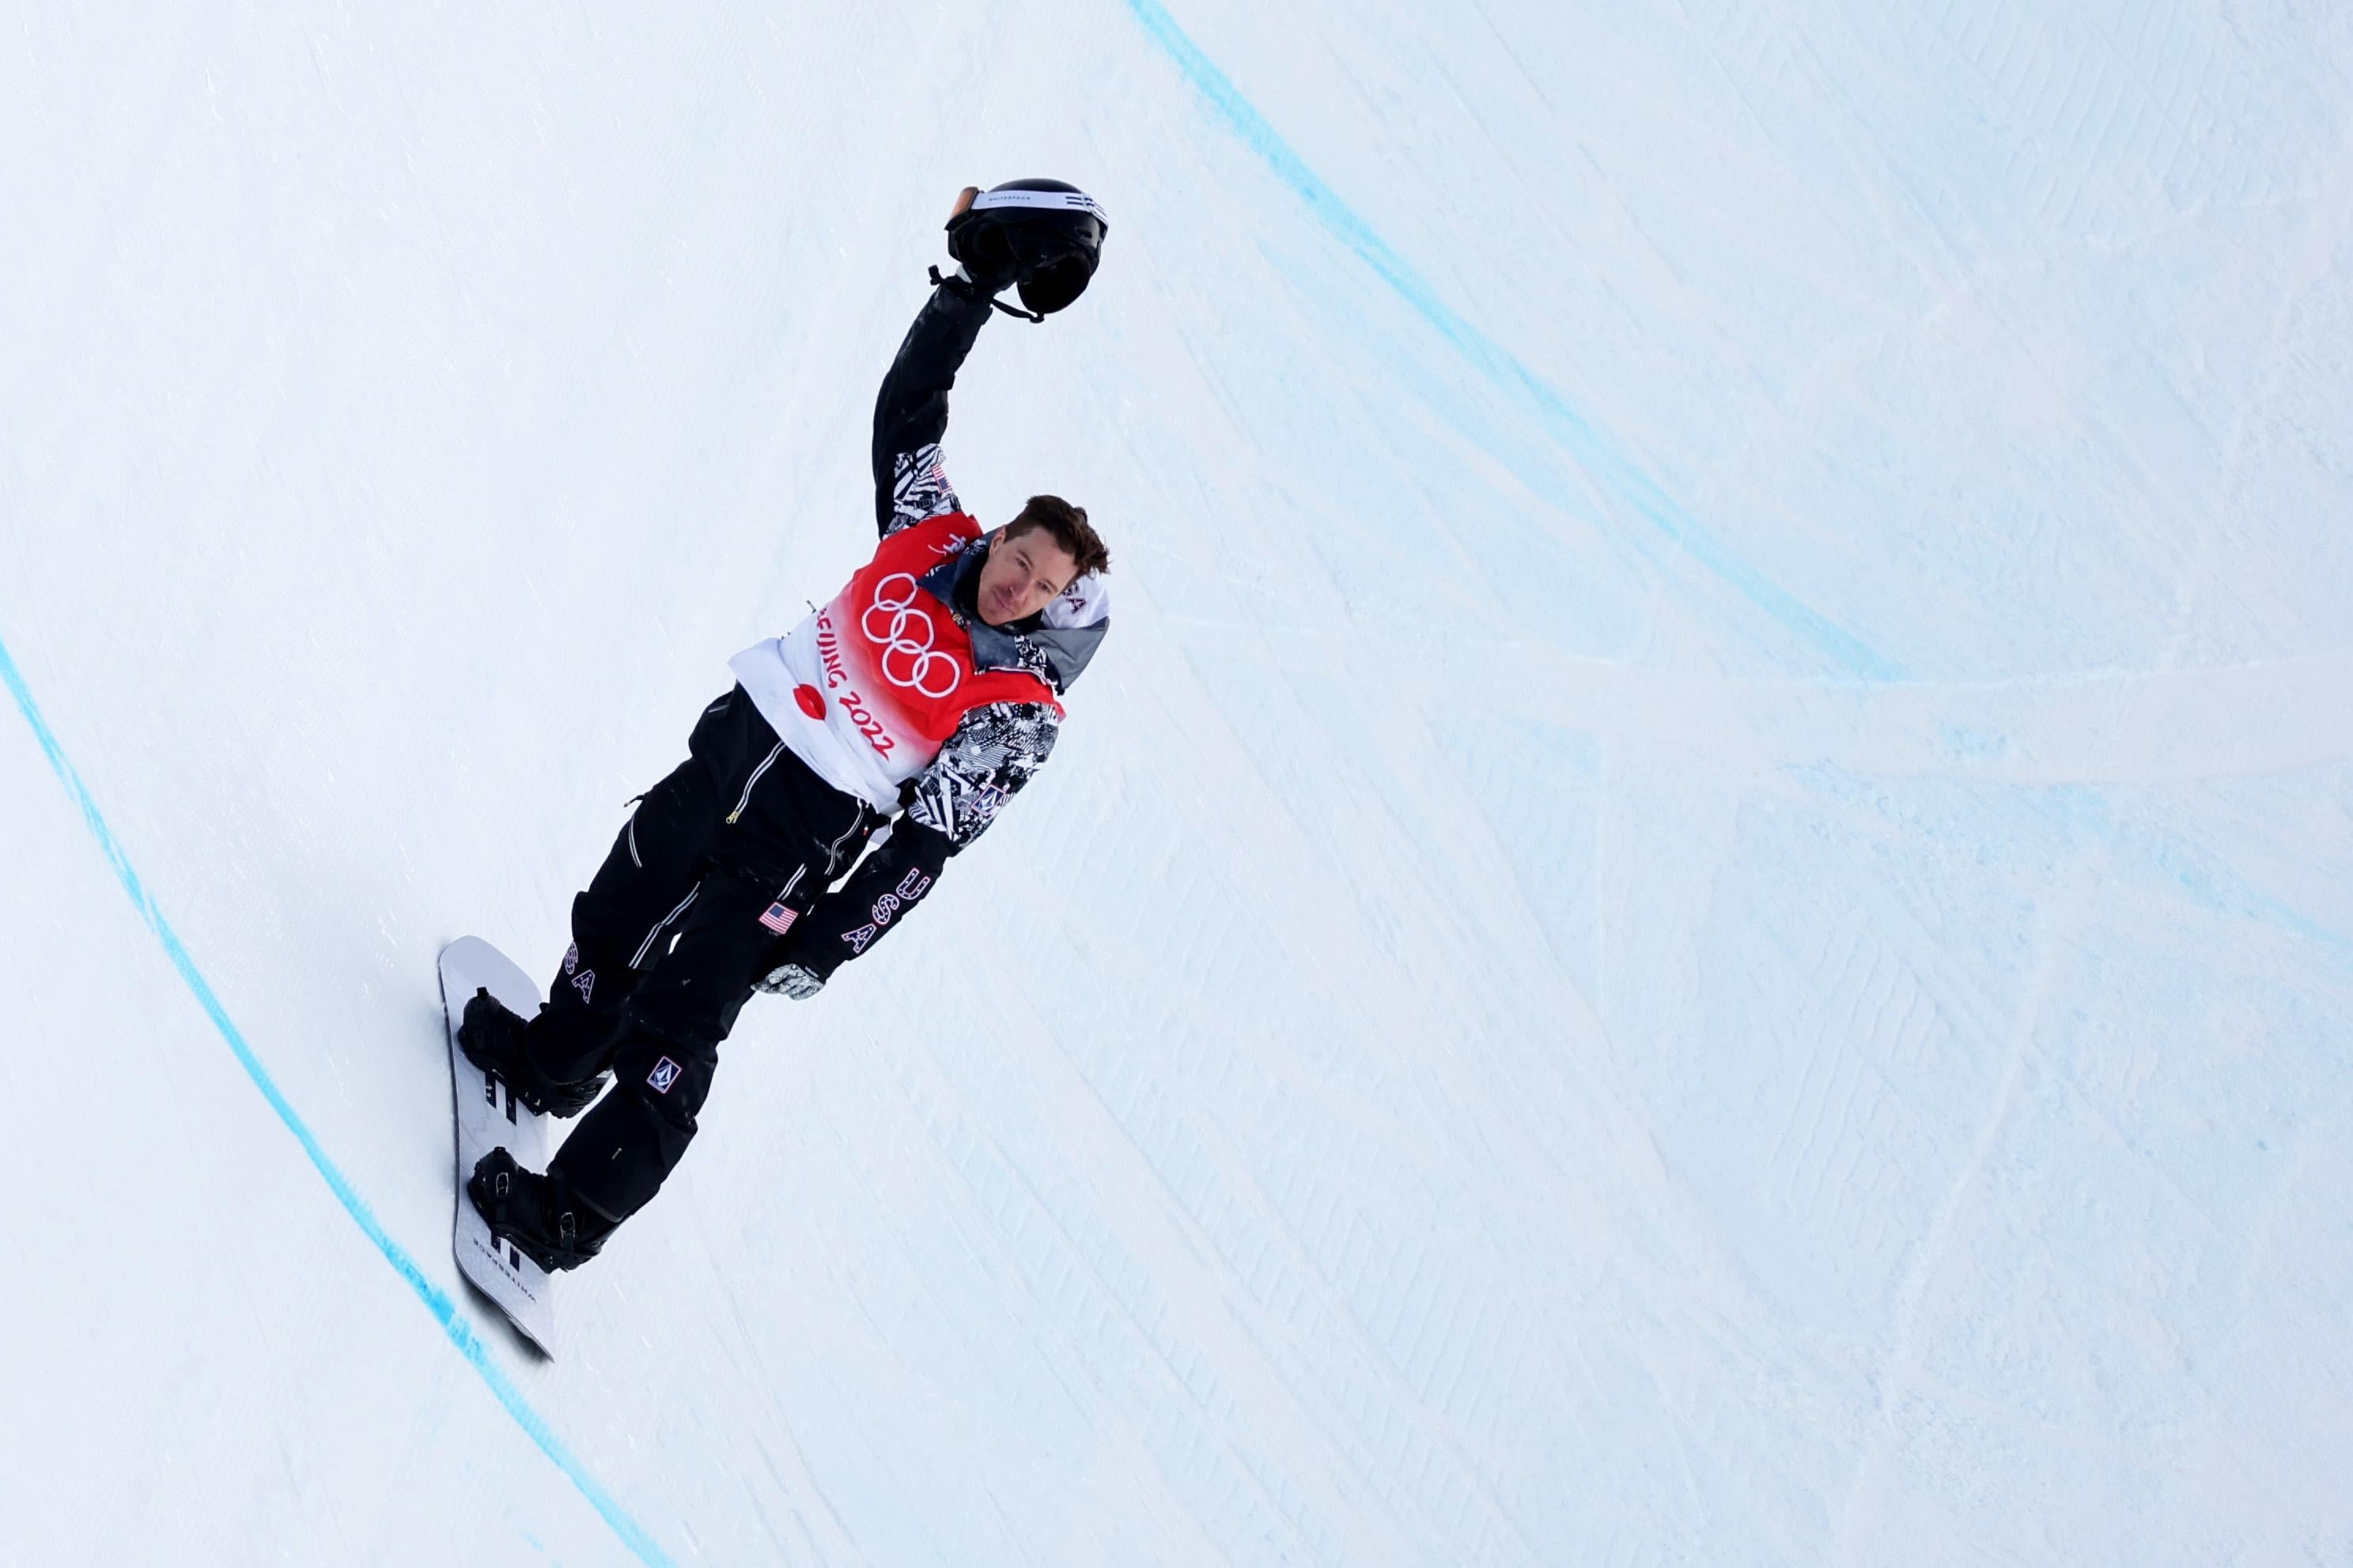 Snowboarding Halfpipe Rules: How Shaun White Can Score Big